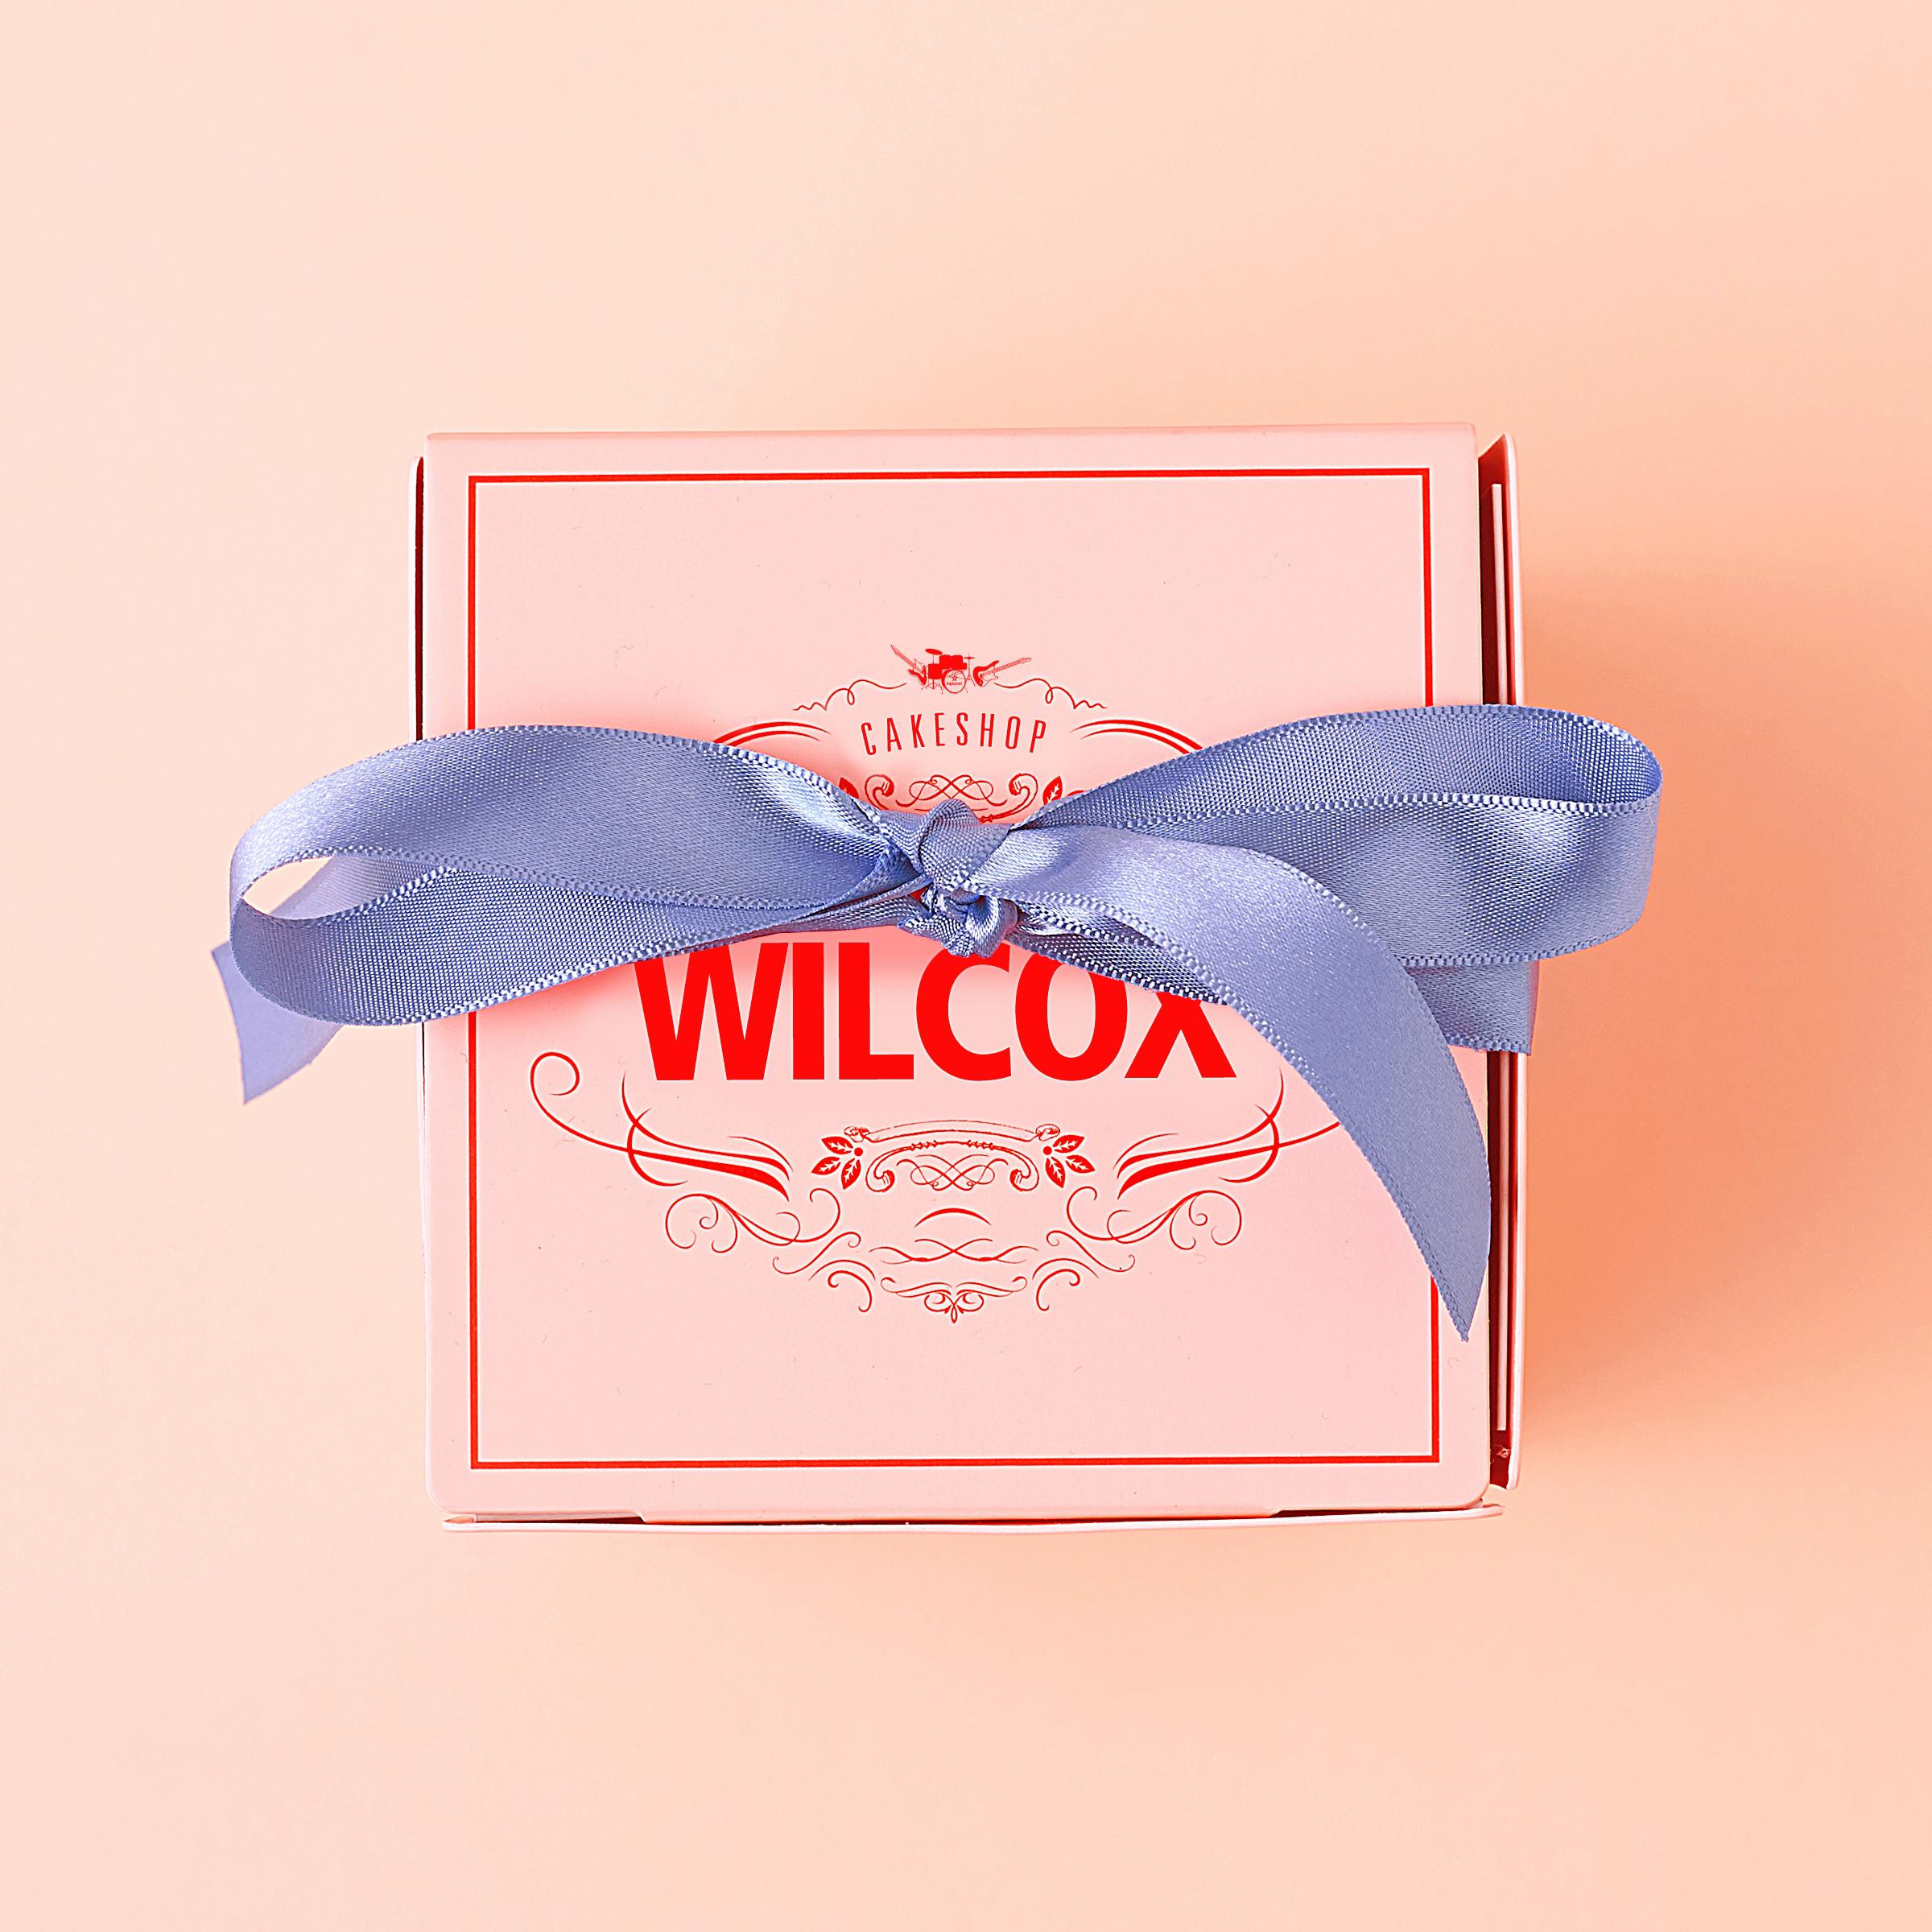 Wilcox - Cake Shop